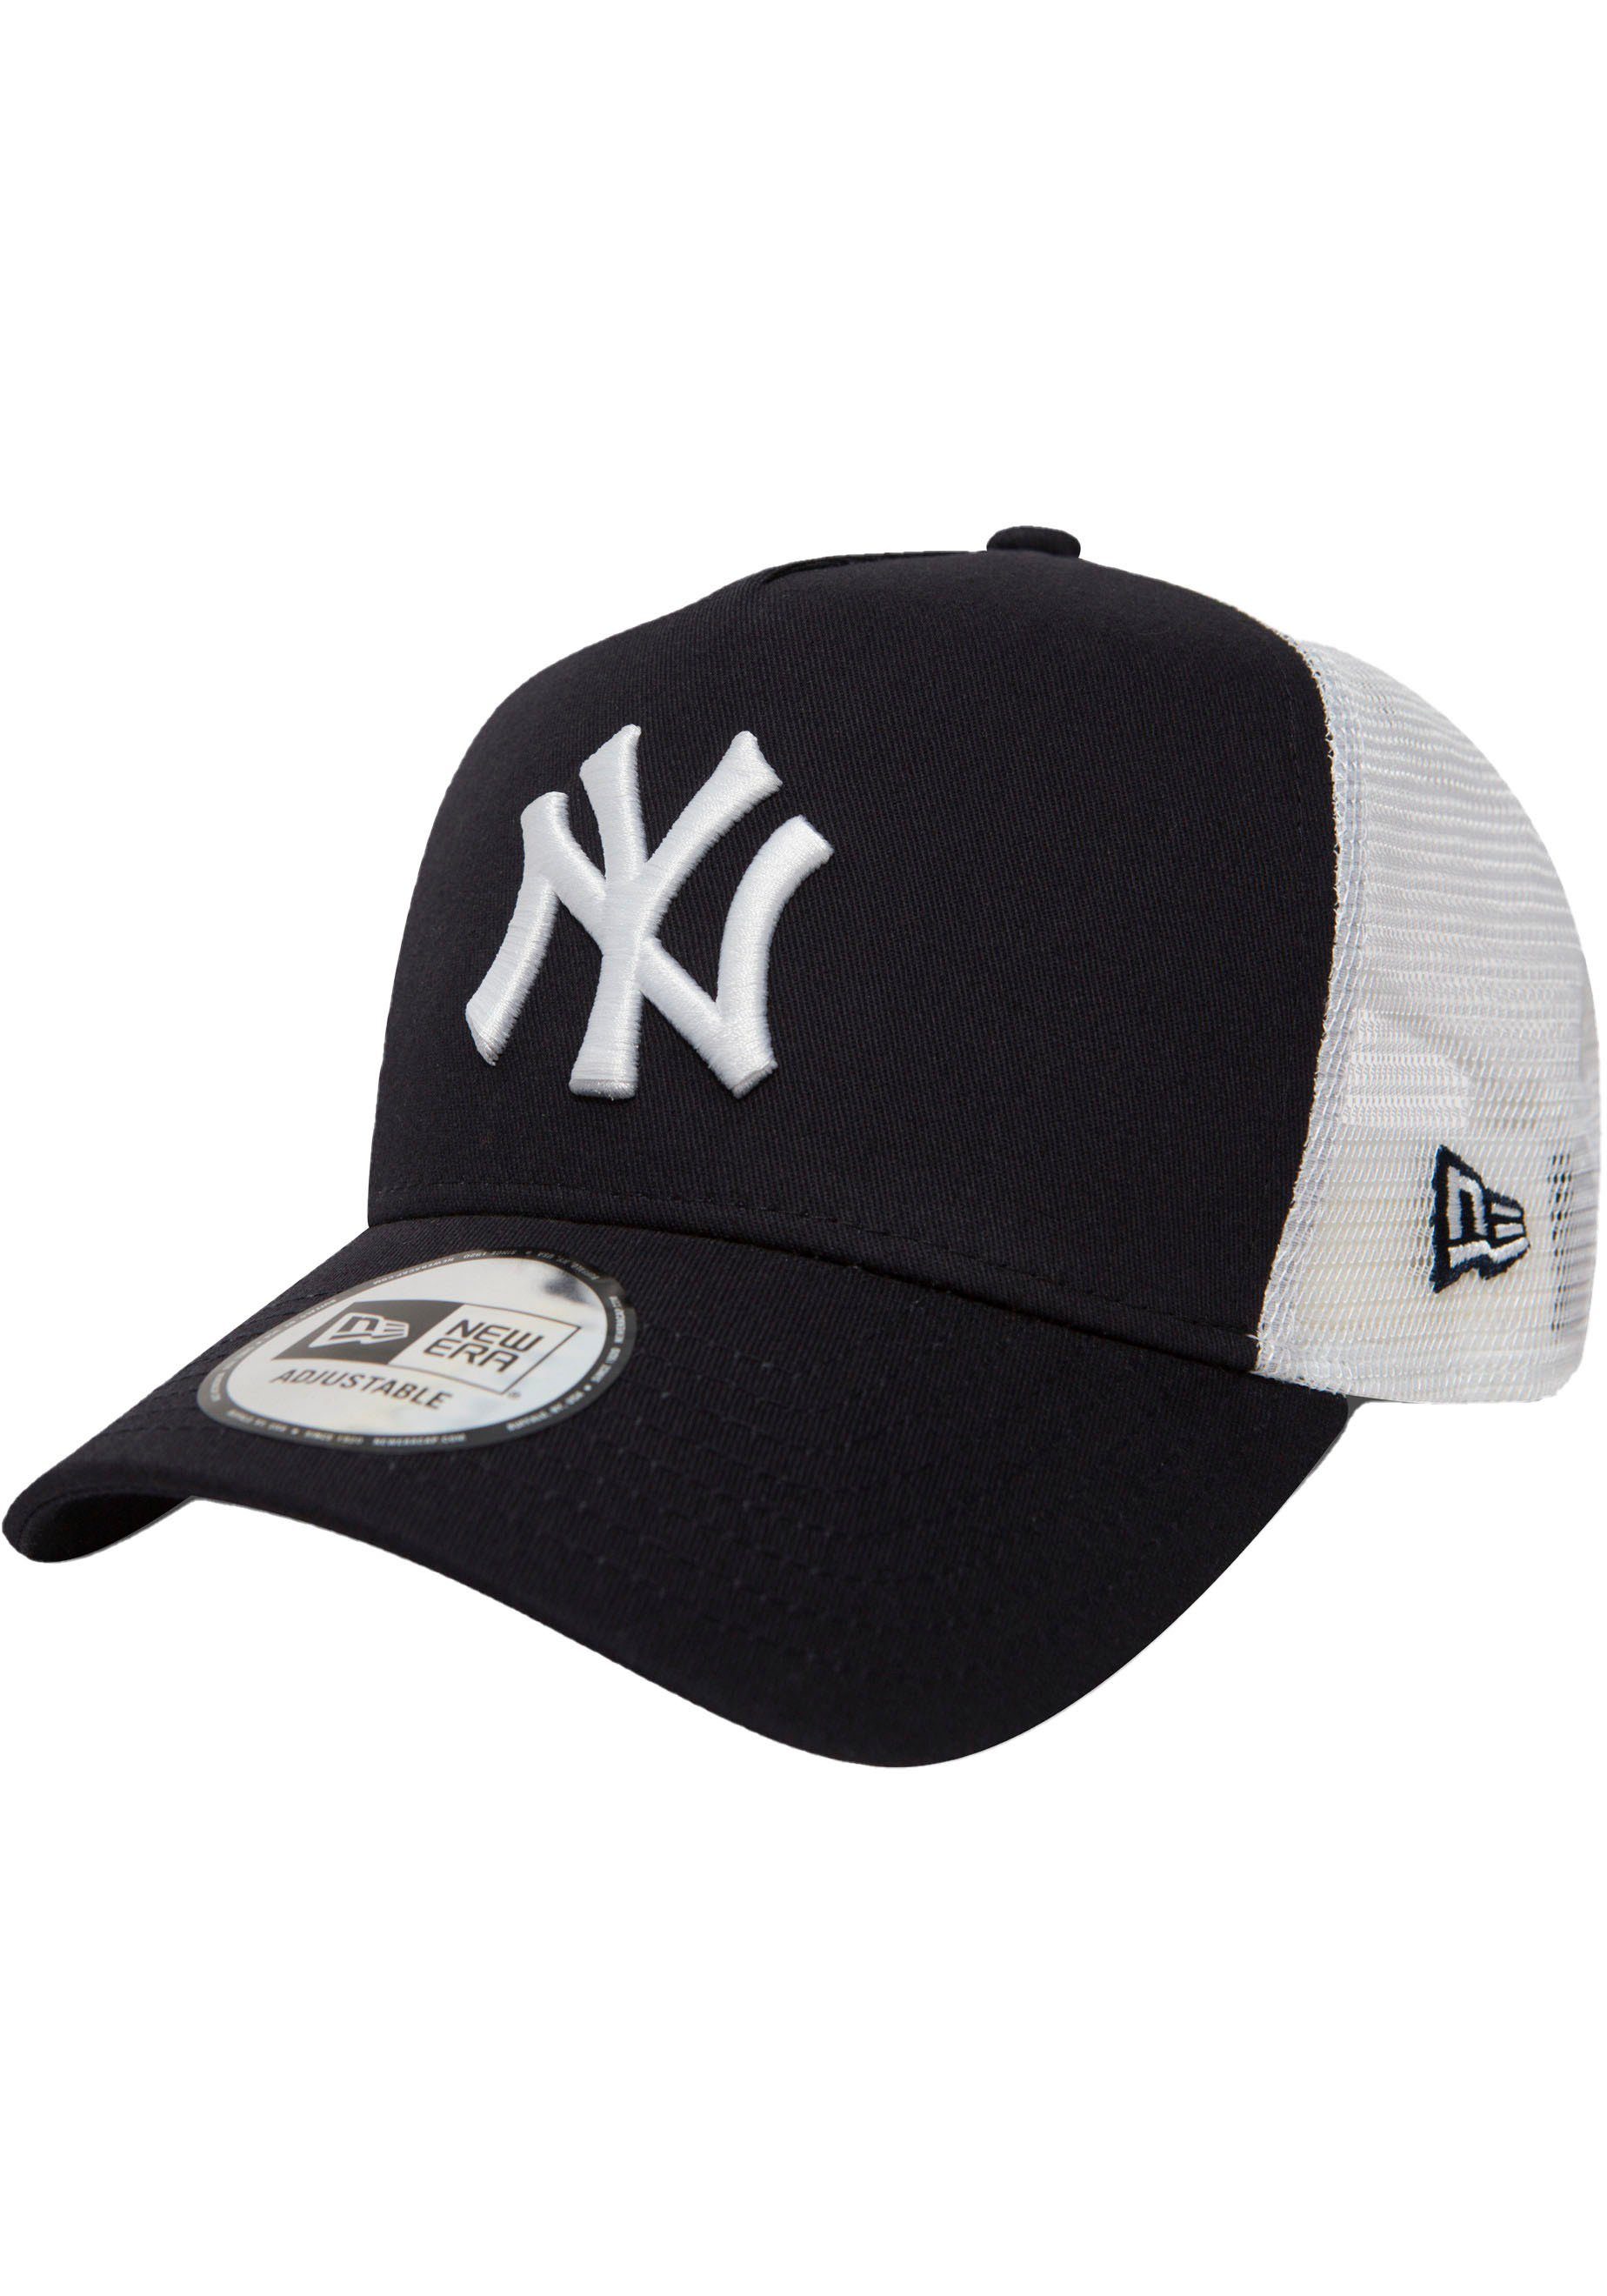 New Era Baseball Cap Basecap NEW YORK YANKEES, NEW ERA BASECAP | Trucker Caps